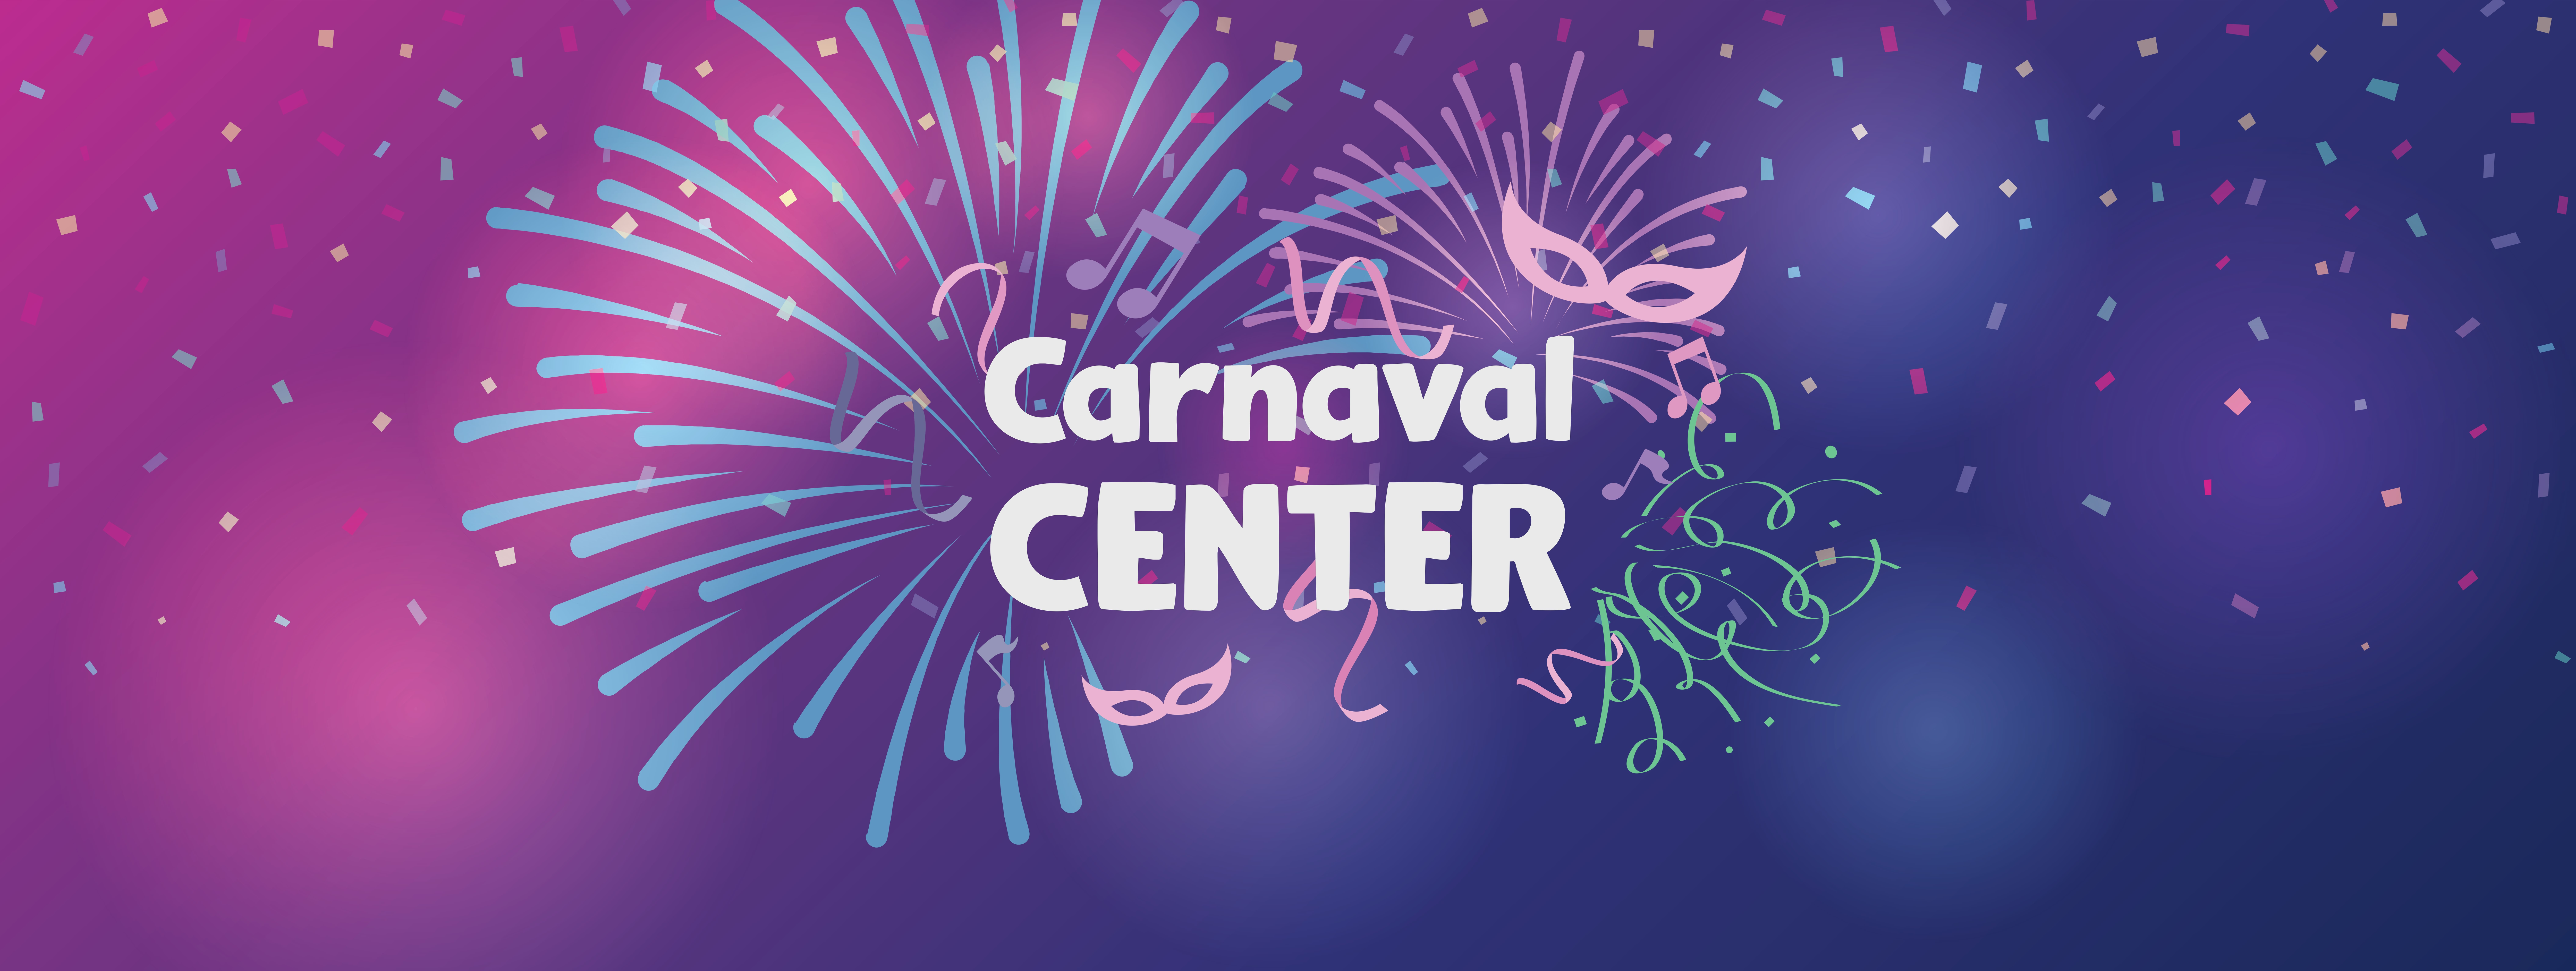 carnaval center